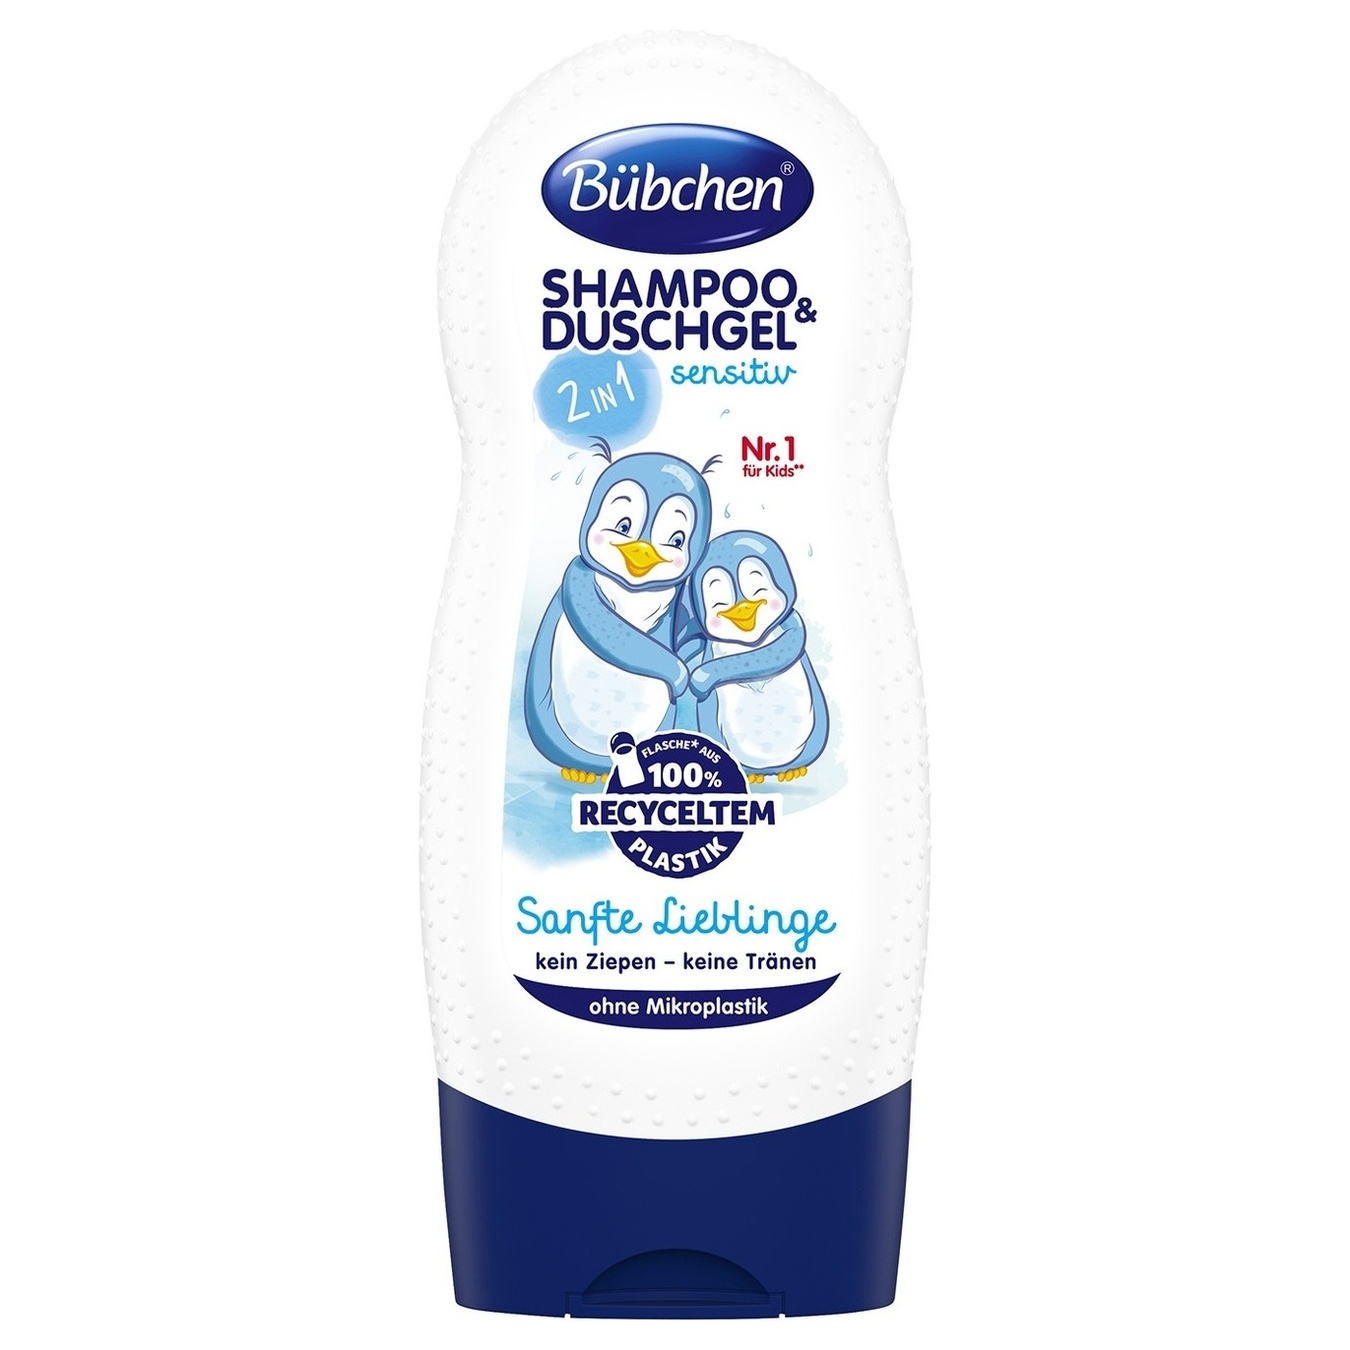 Bubchen Affectionate and Gentle shampoo-shower gel 230ml